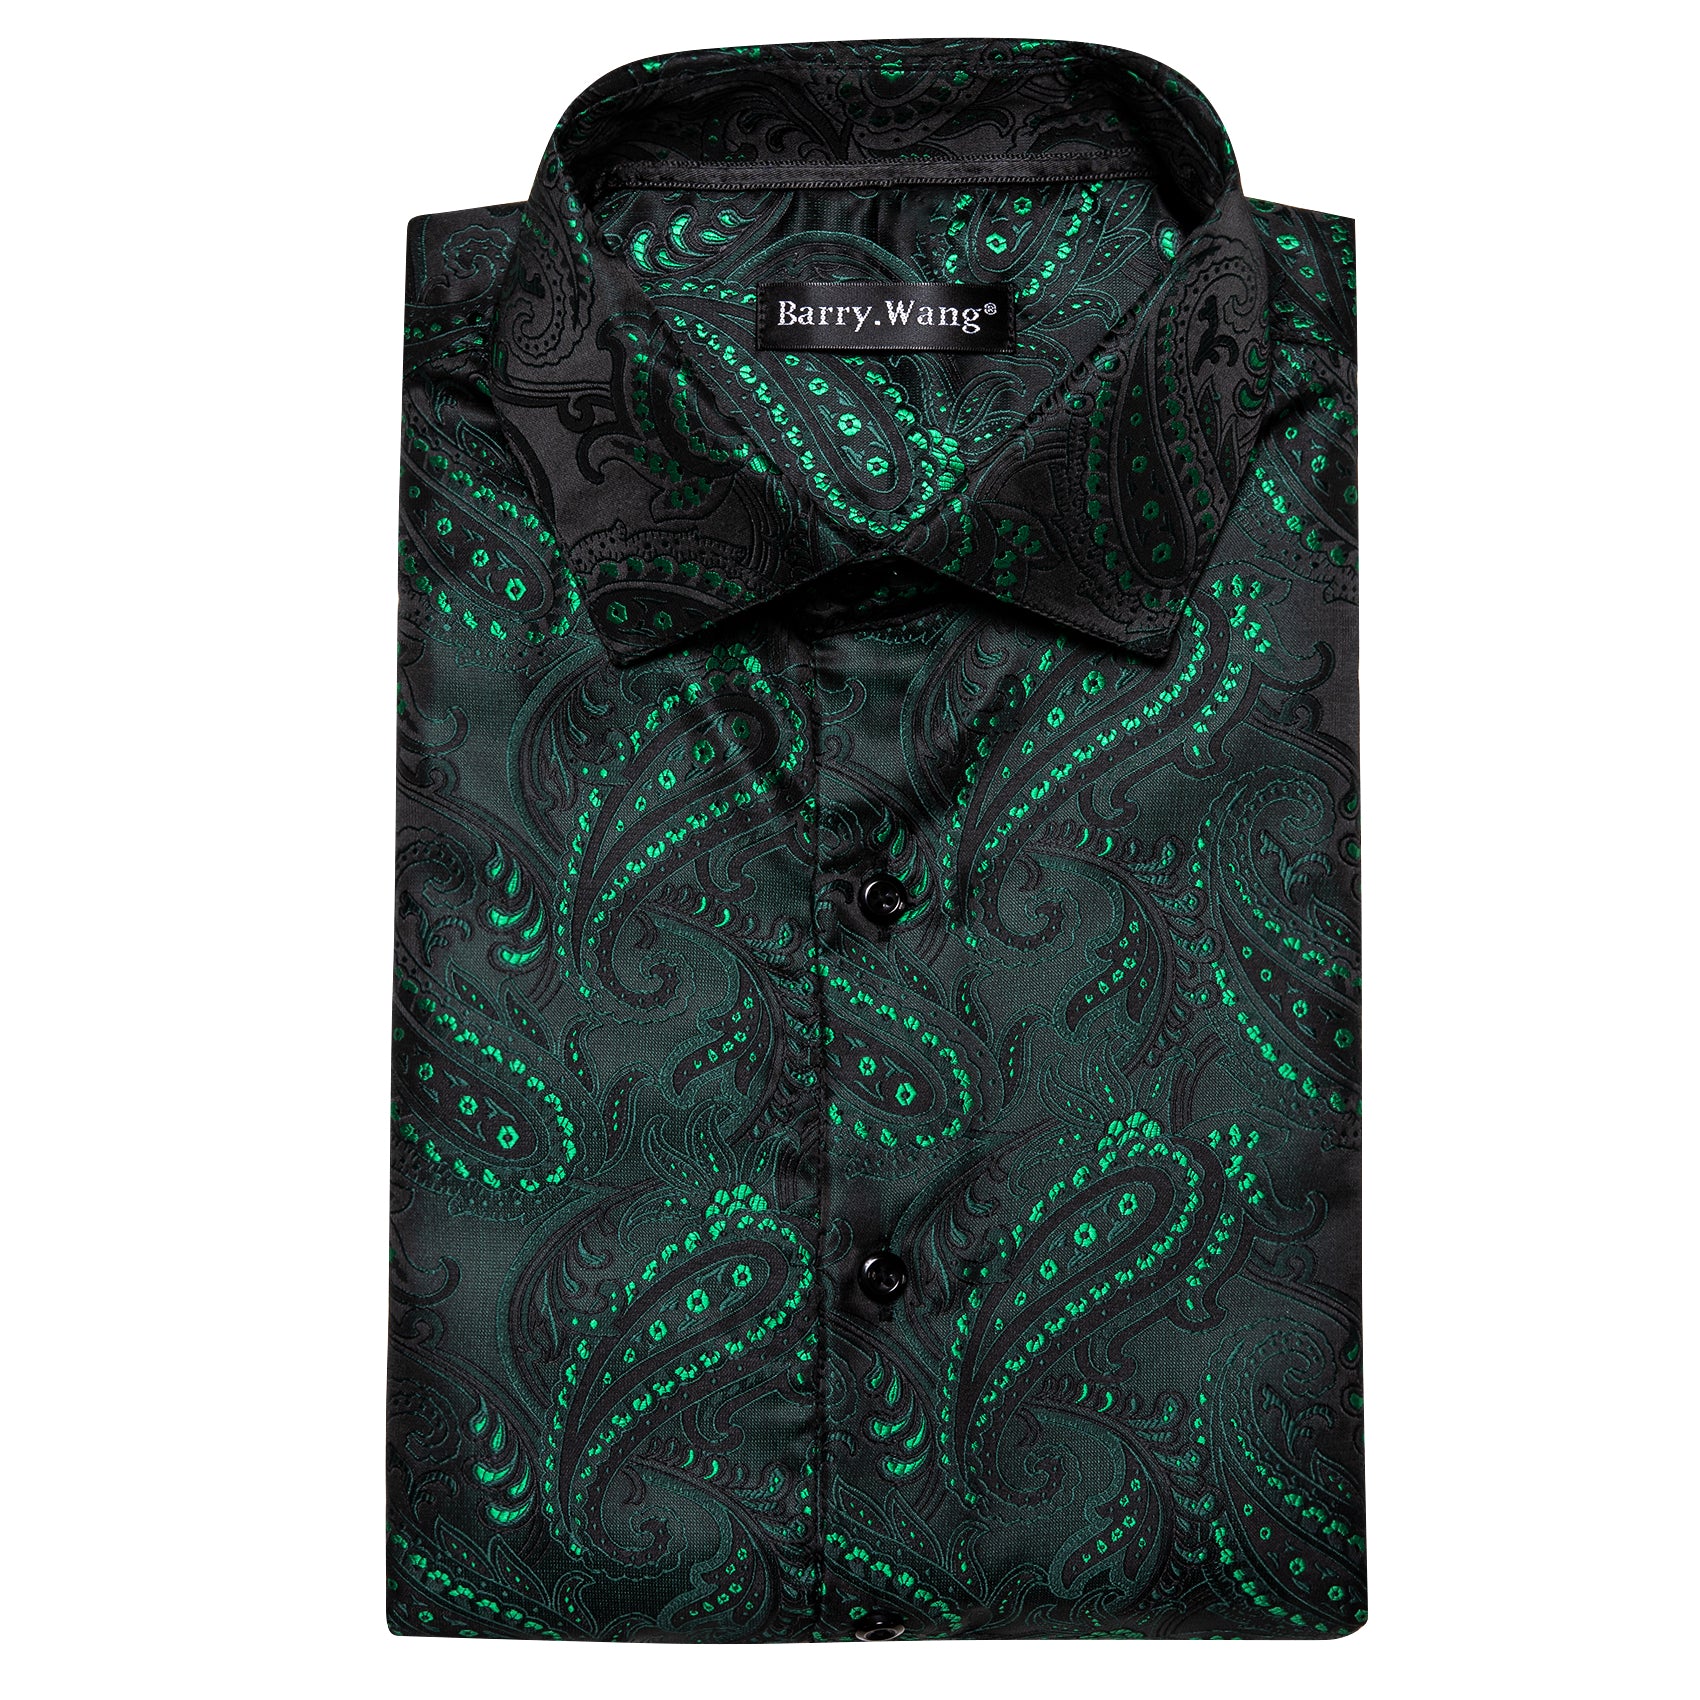 Barry.wang Fashion Green Black Paisley Silk Men's Shirt